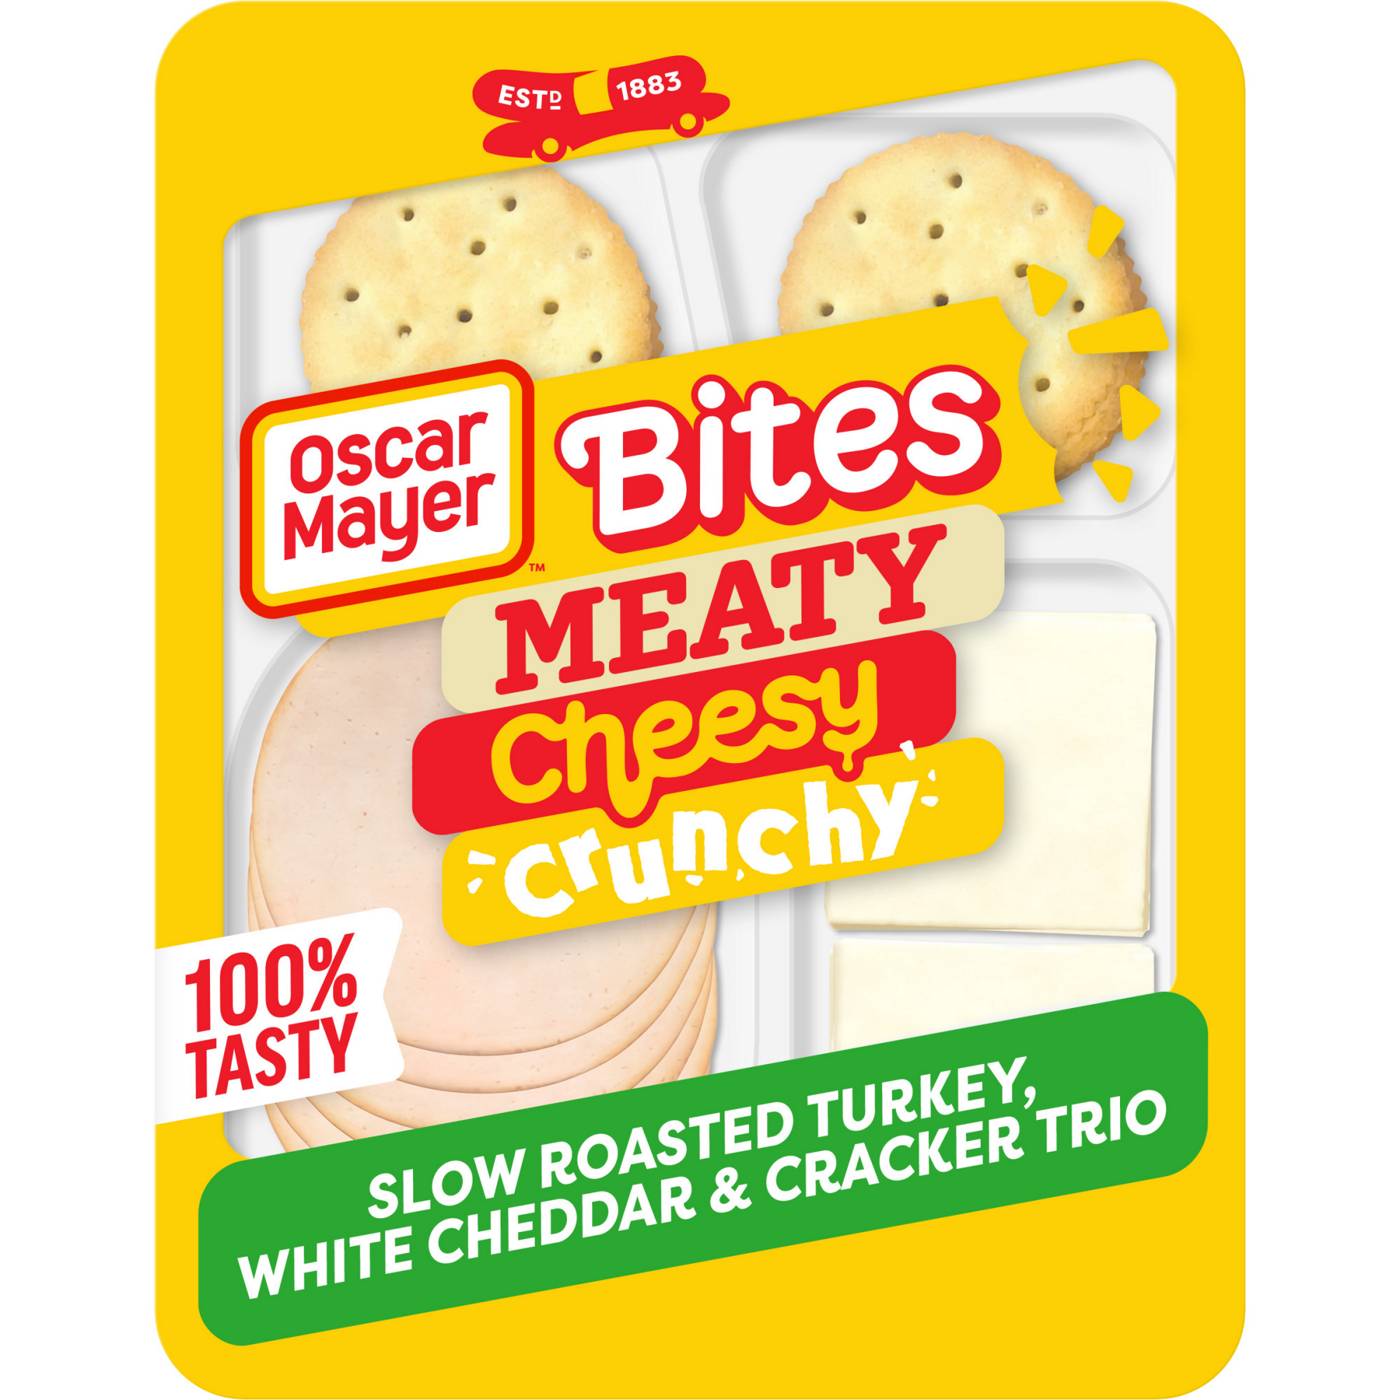 Oscar Mayer Bites Snack Tray - Slow Roasted Turkey, White Cheddar & Crackers Trio; image 1 of 7